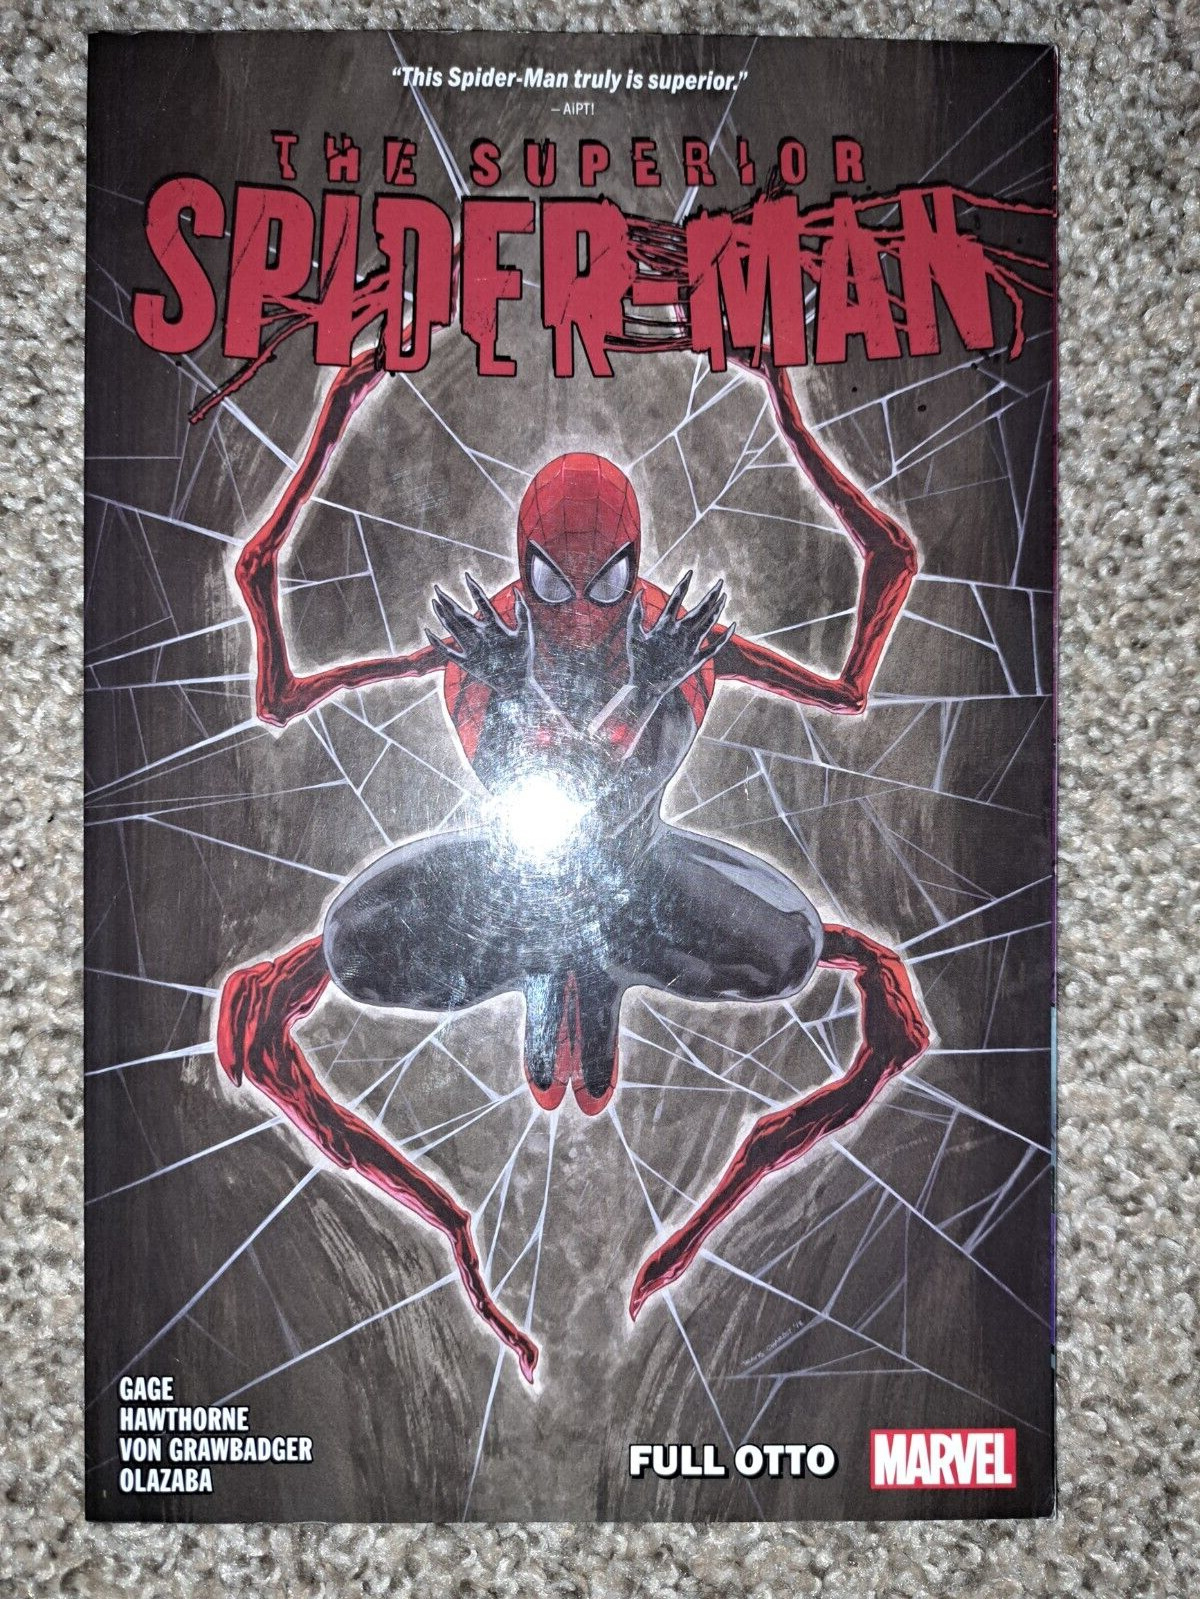 The Superior Spider-Man vol 1: Full Otto (Marvel Comics 2019 TPB Trade Paperback